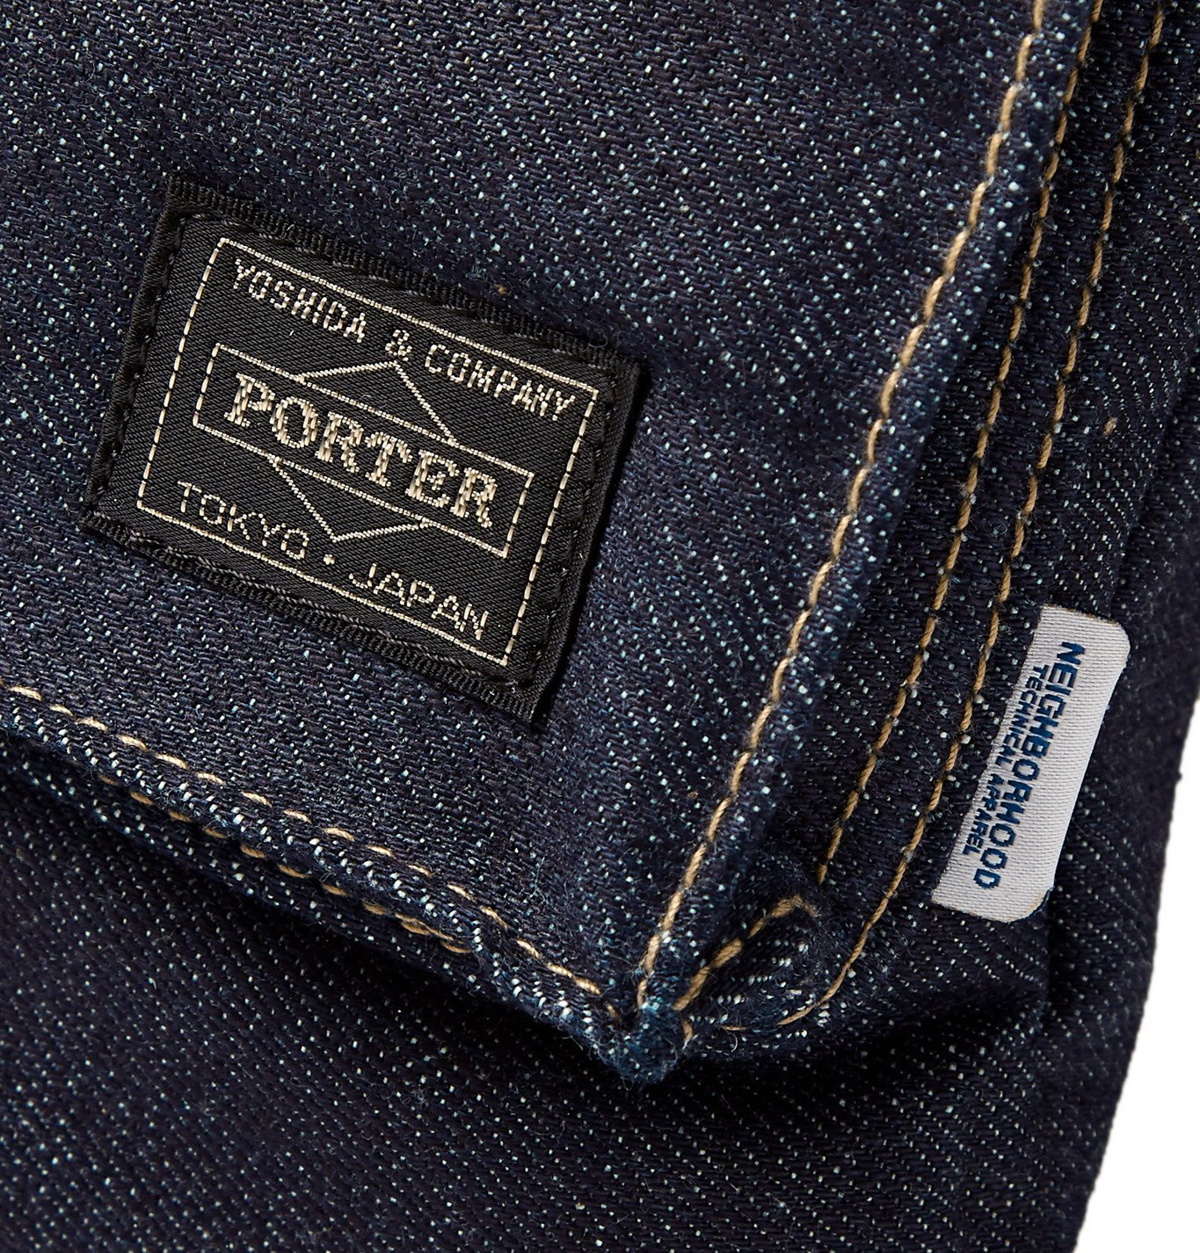 Porter-Yoshida & Co Jean Tote Bag Medium Navy - 381-08896-50